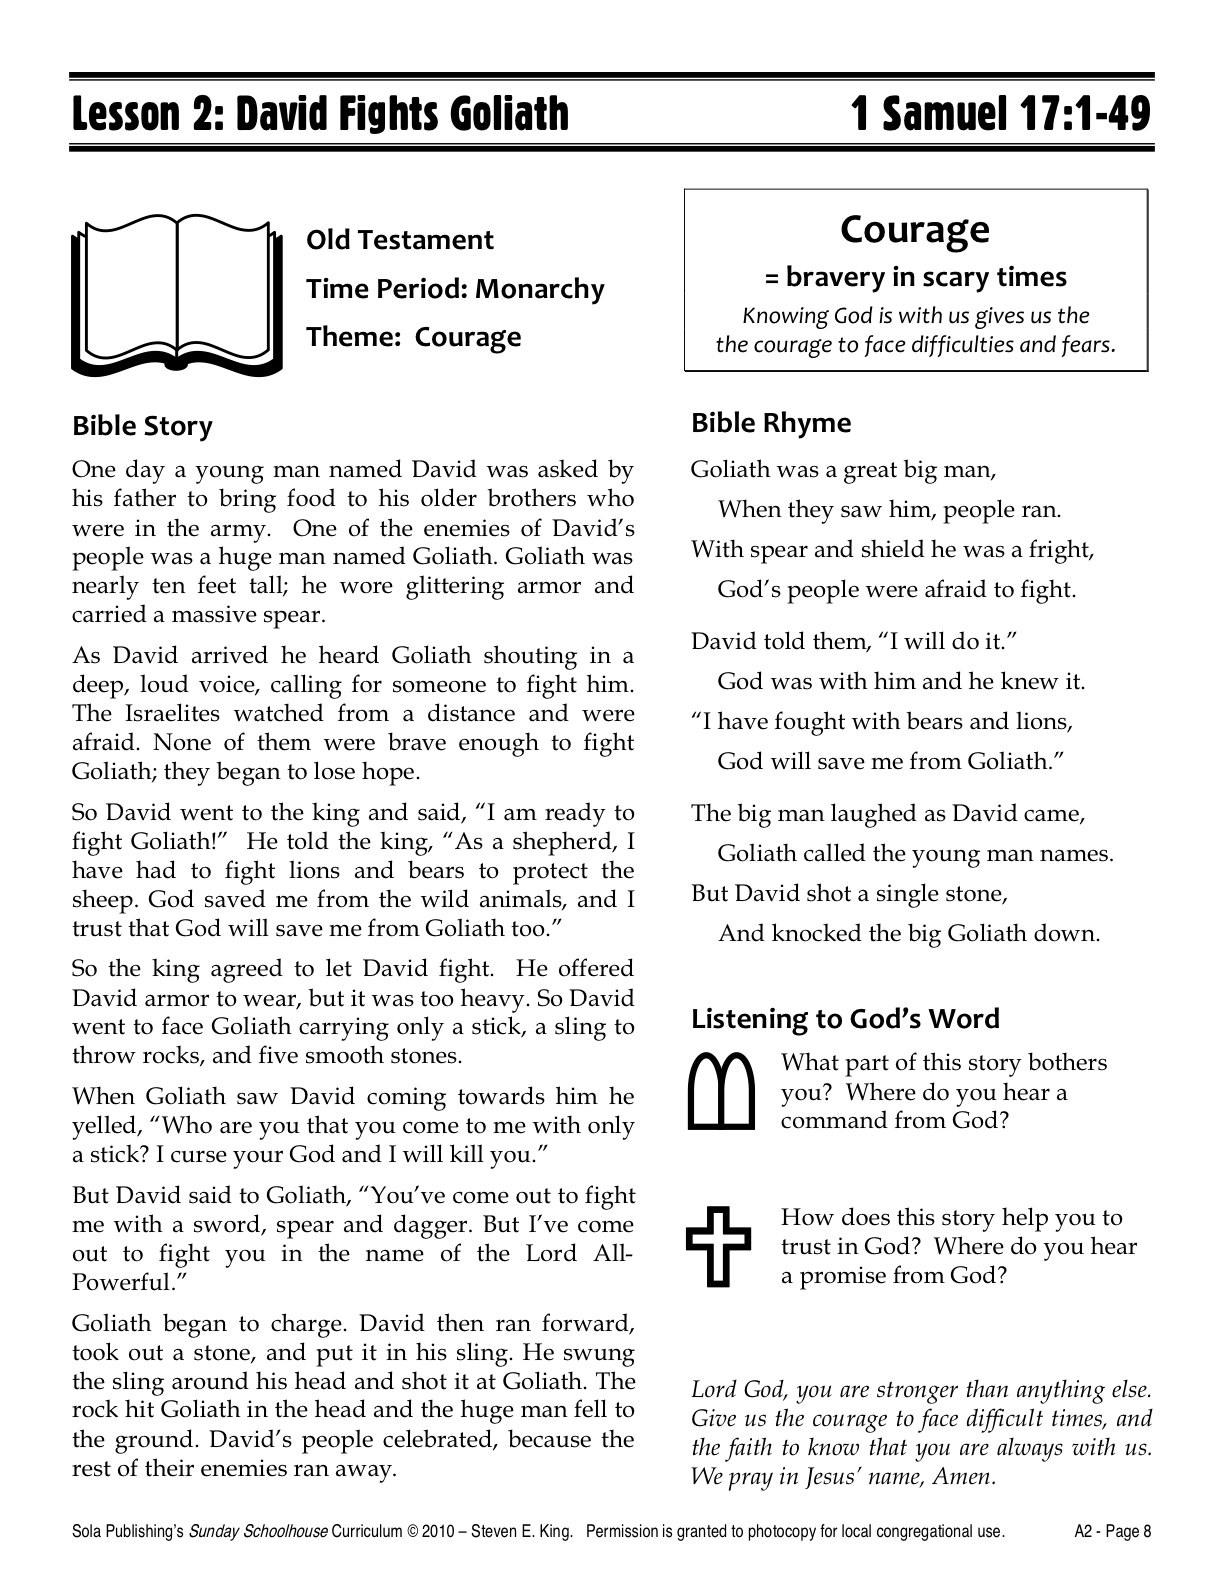 David and Goliath Sunday School Worksheets Image